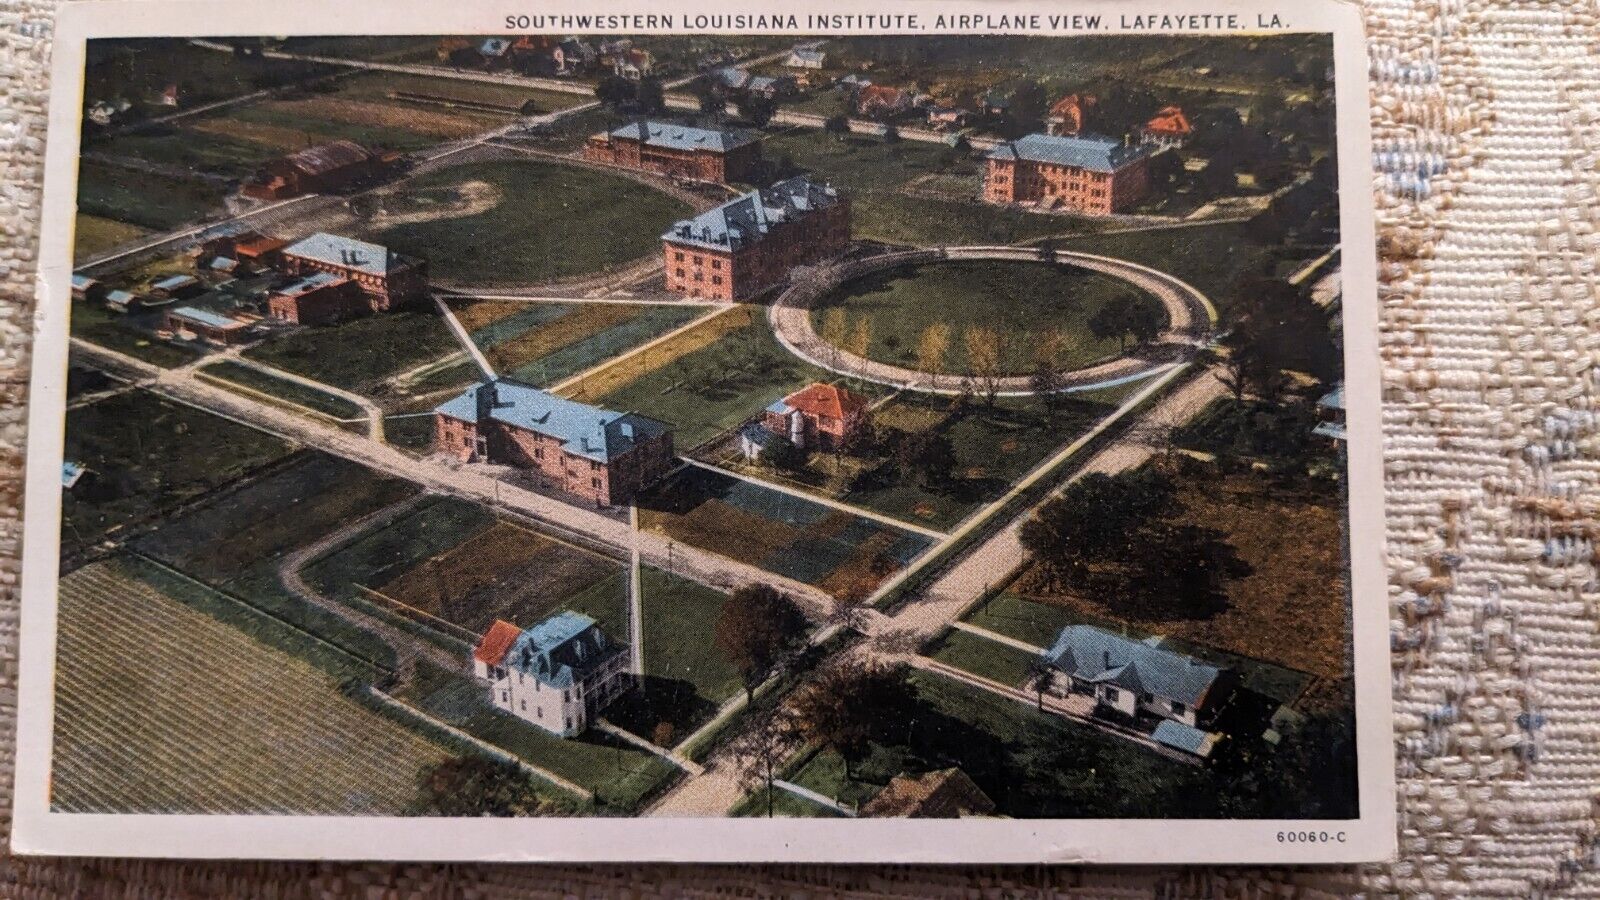 Vintage Postcard 1934 Southwestern Louisiana Institute Airplane View Lafayette